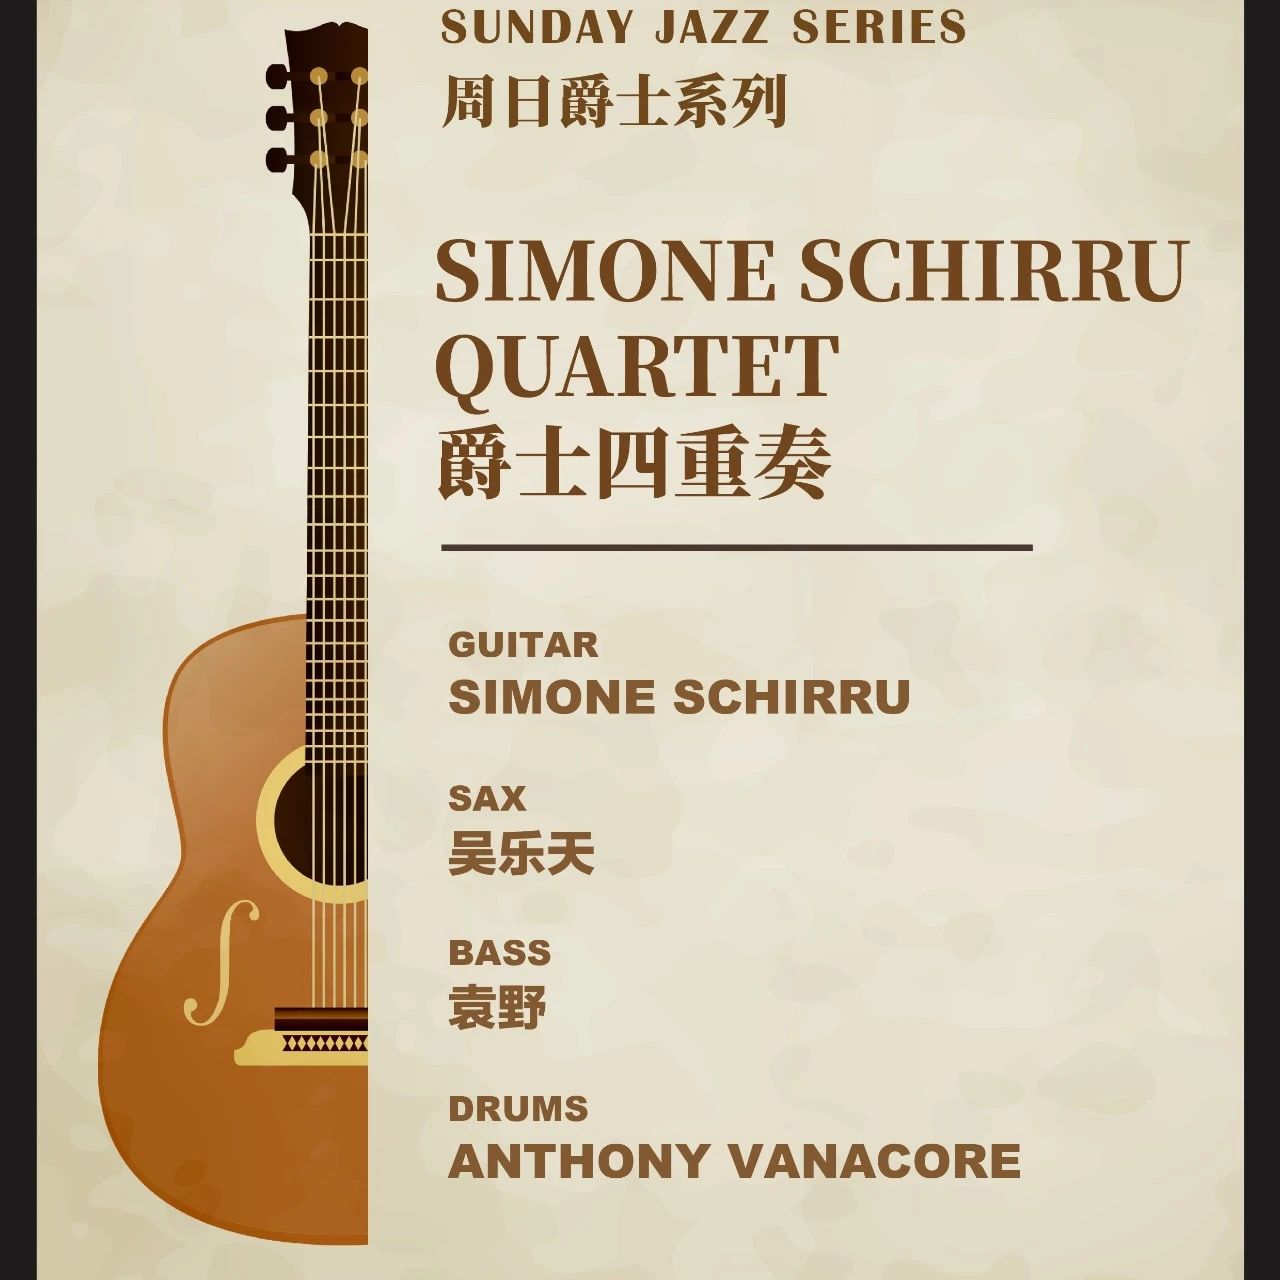 【04.17 SUN 周日】SUNDAY JAZZ: SIMONE SCHIRRU QUARTET | 爵士四重奏